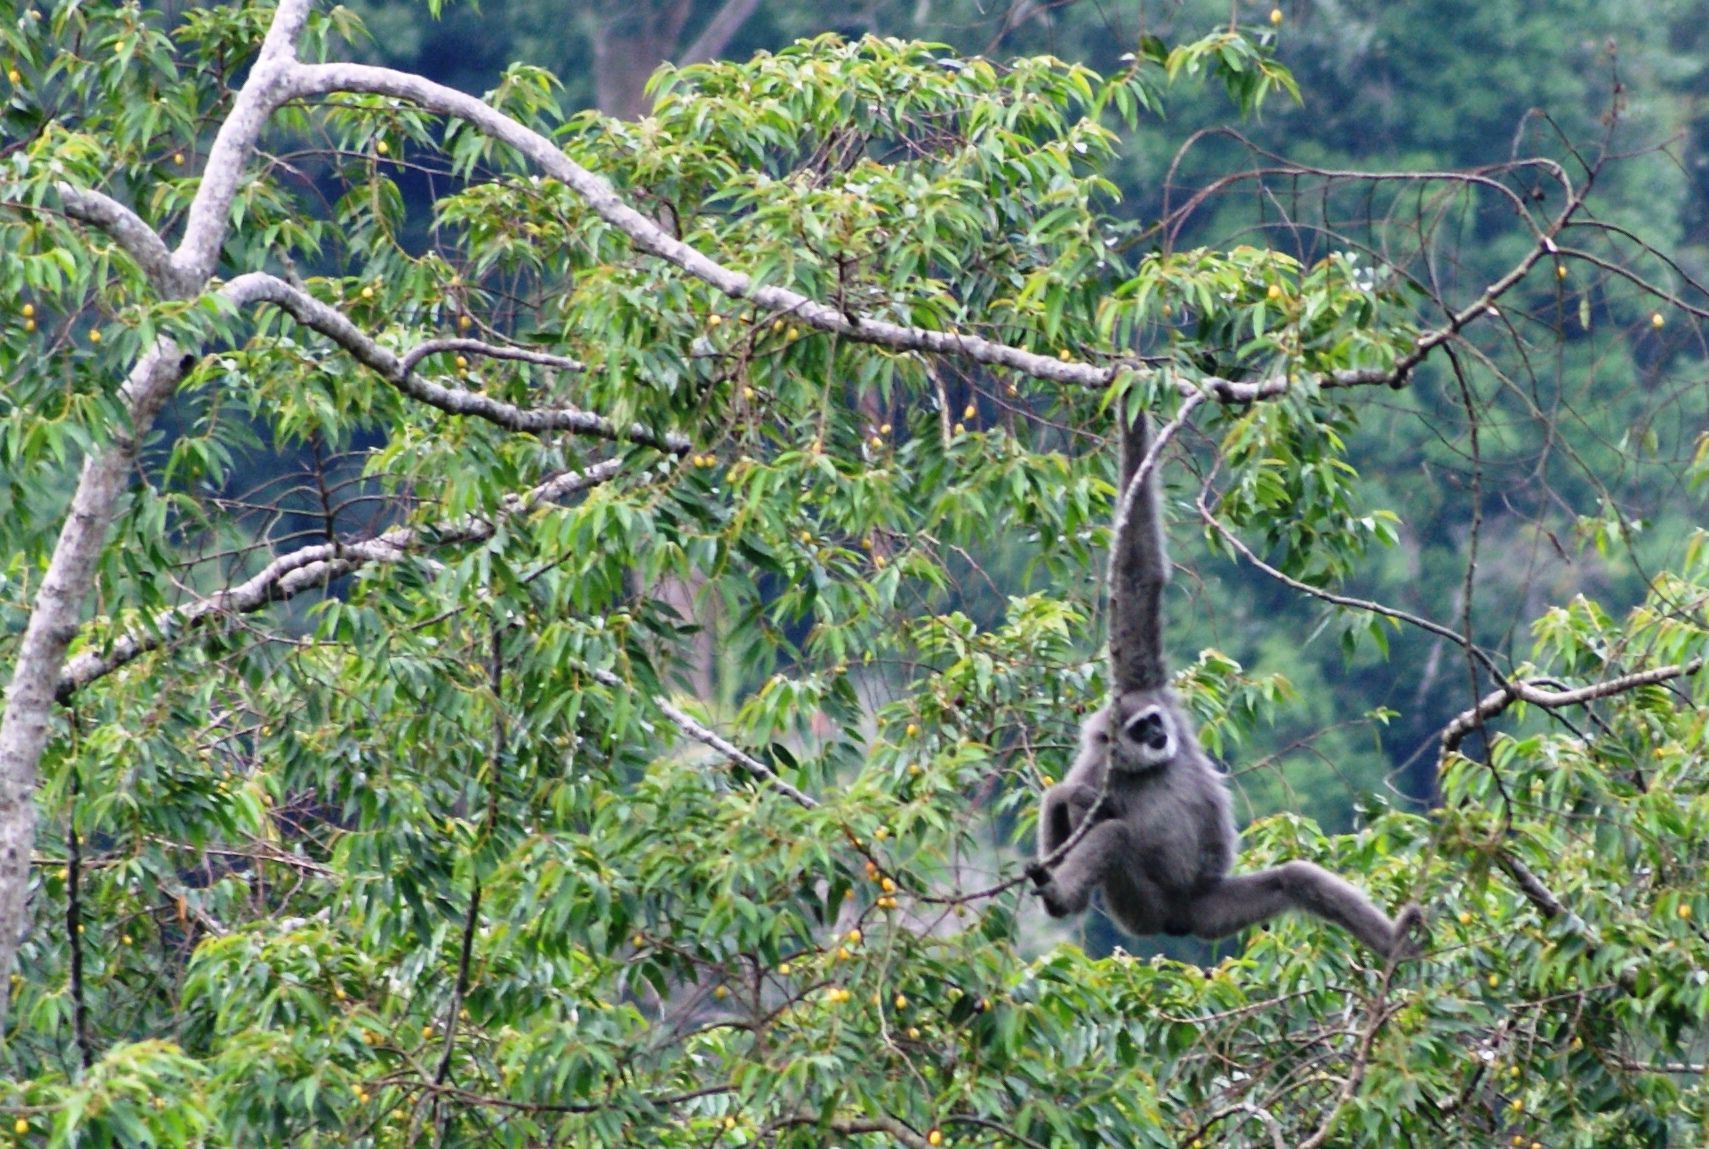 Owa jawa (hylobates moloch) salah satu hewan endemik yang ada di kawasan Taman Nasional Gunung Gede Pangrango, Jawa Barat. Foto : CI Indonesia